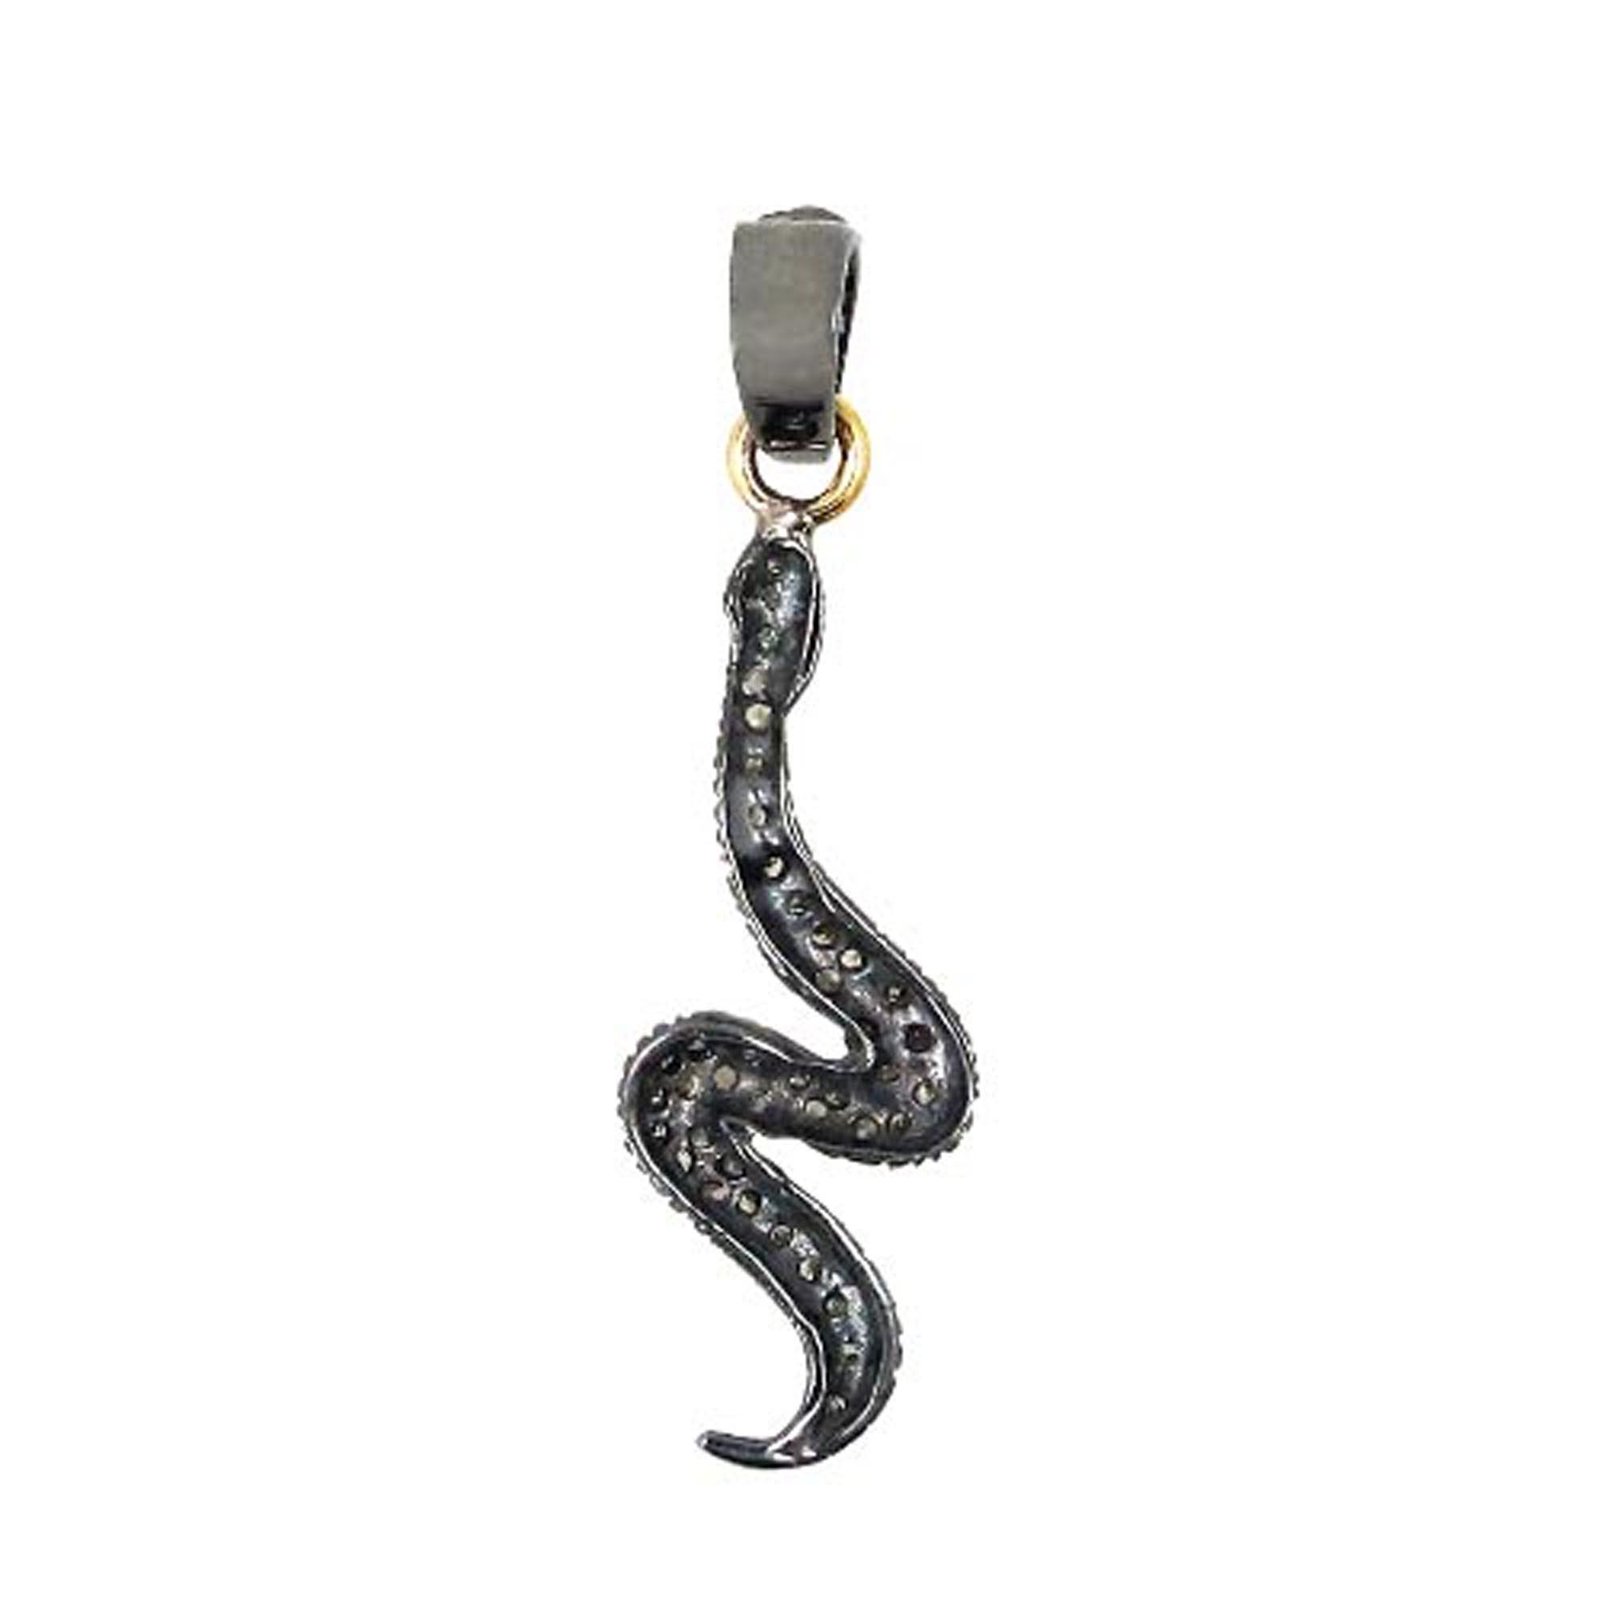 Vintage snake pendant jewelry